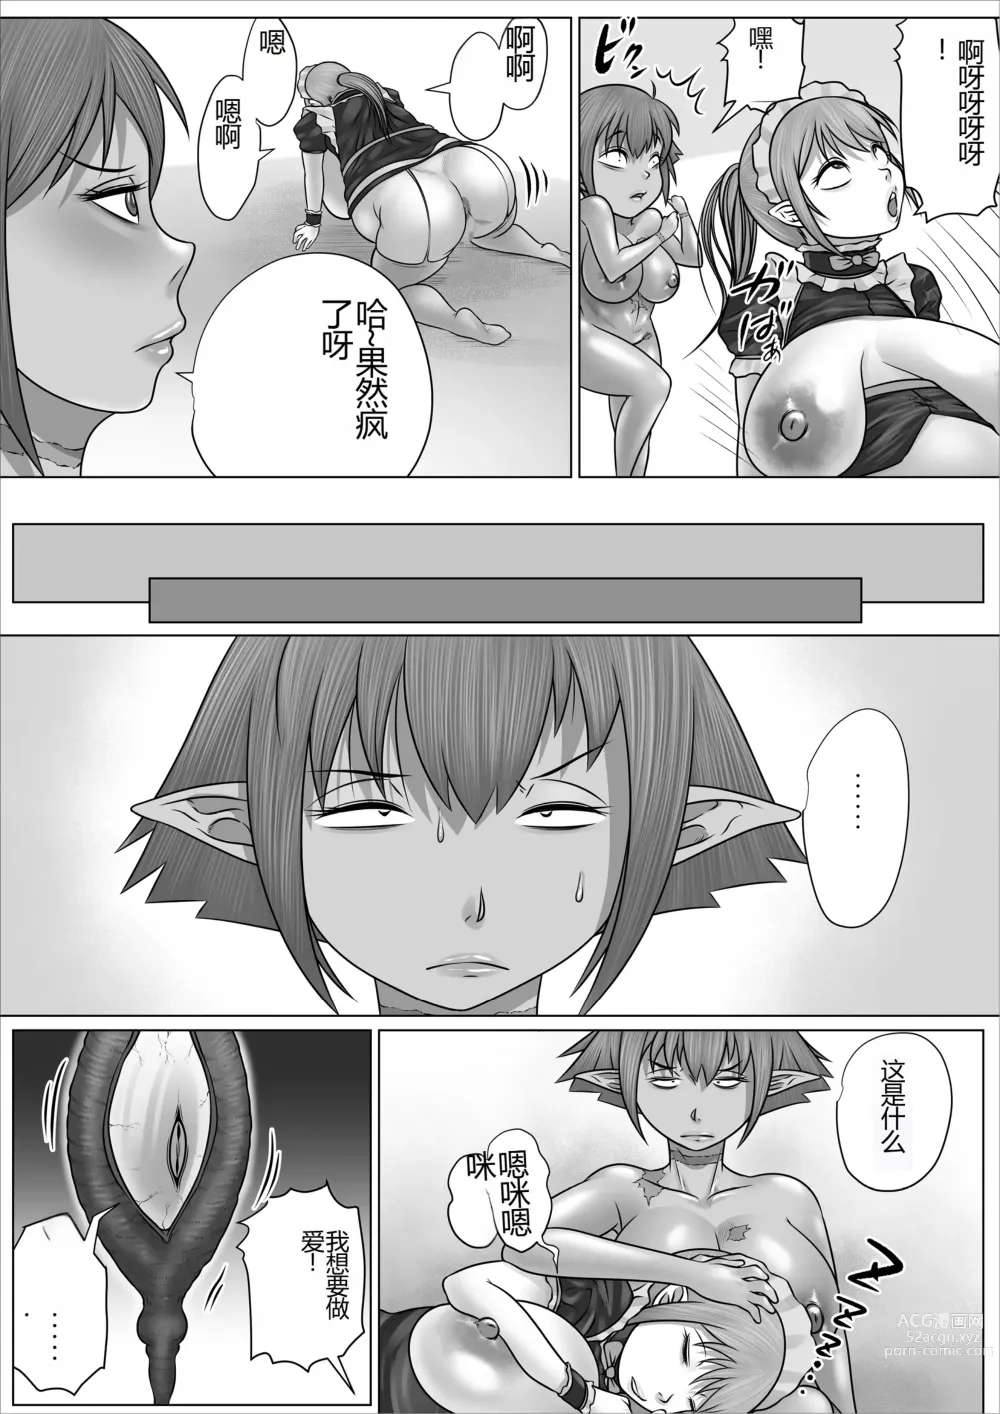 Page 68 of doujinshi 被誉为英雄的女战士长艾尔拉被改造成淫乱的母猪成为一生奉献做为配种精液便器的故事~扶她篇~